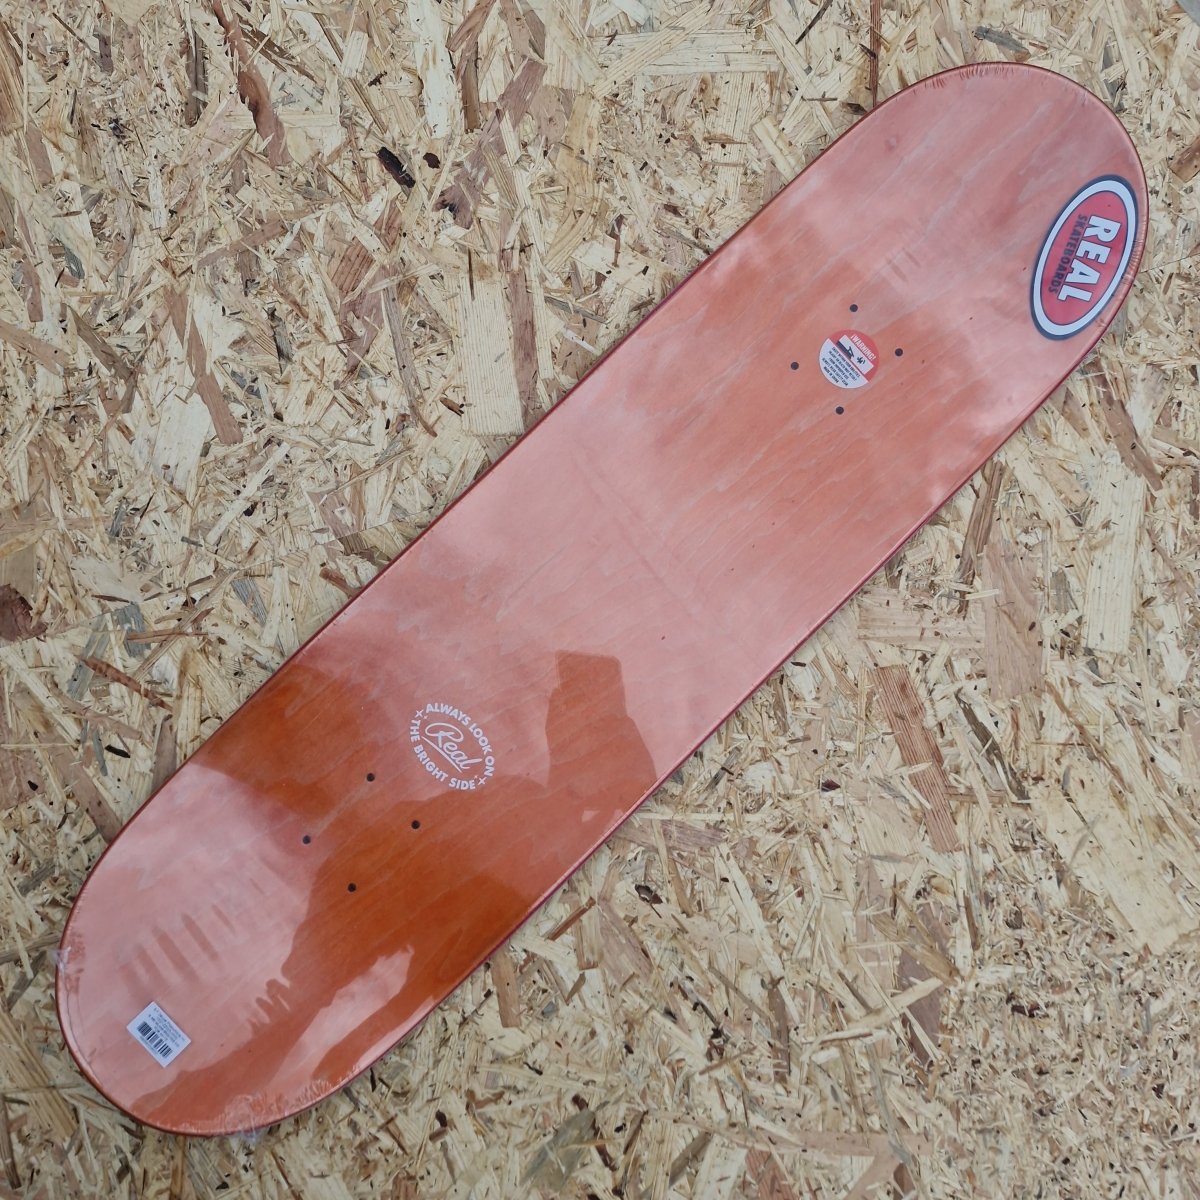 Real Wilkins Brightside 8.62 Deck - Skateboard-Decks - Rollbrett Mission